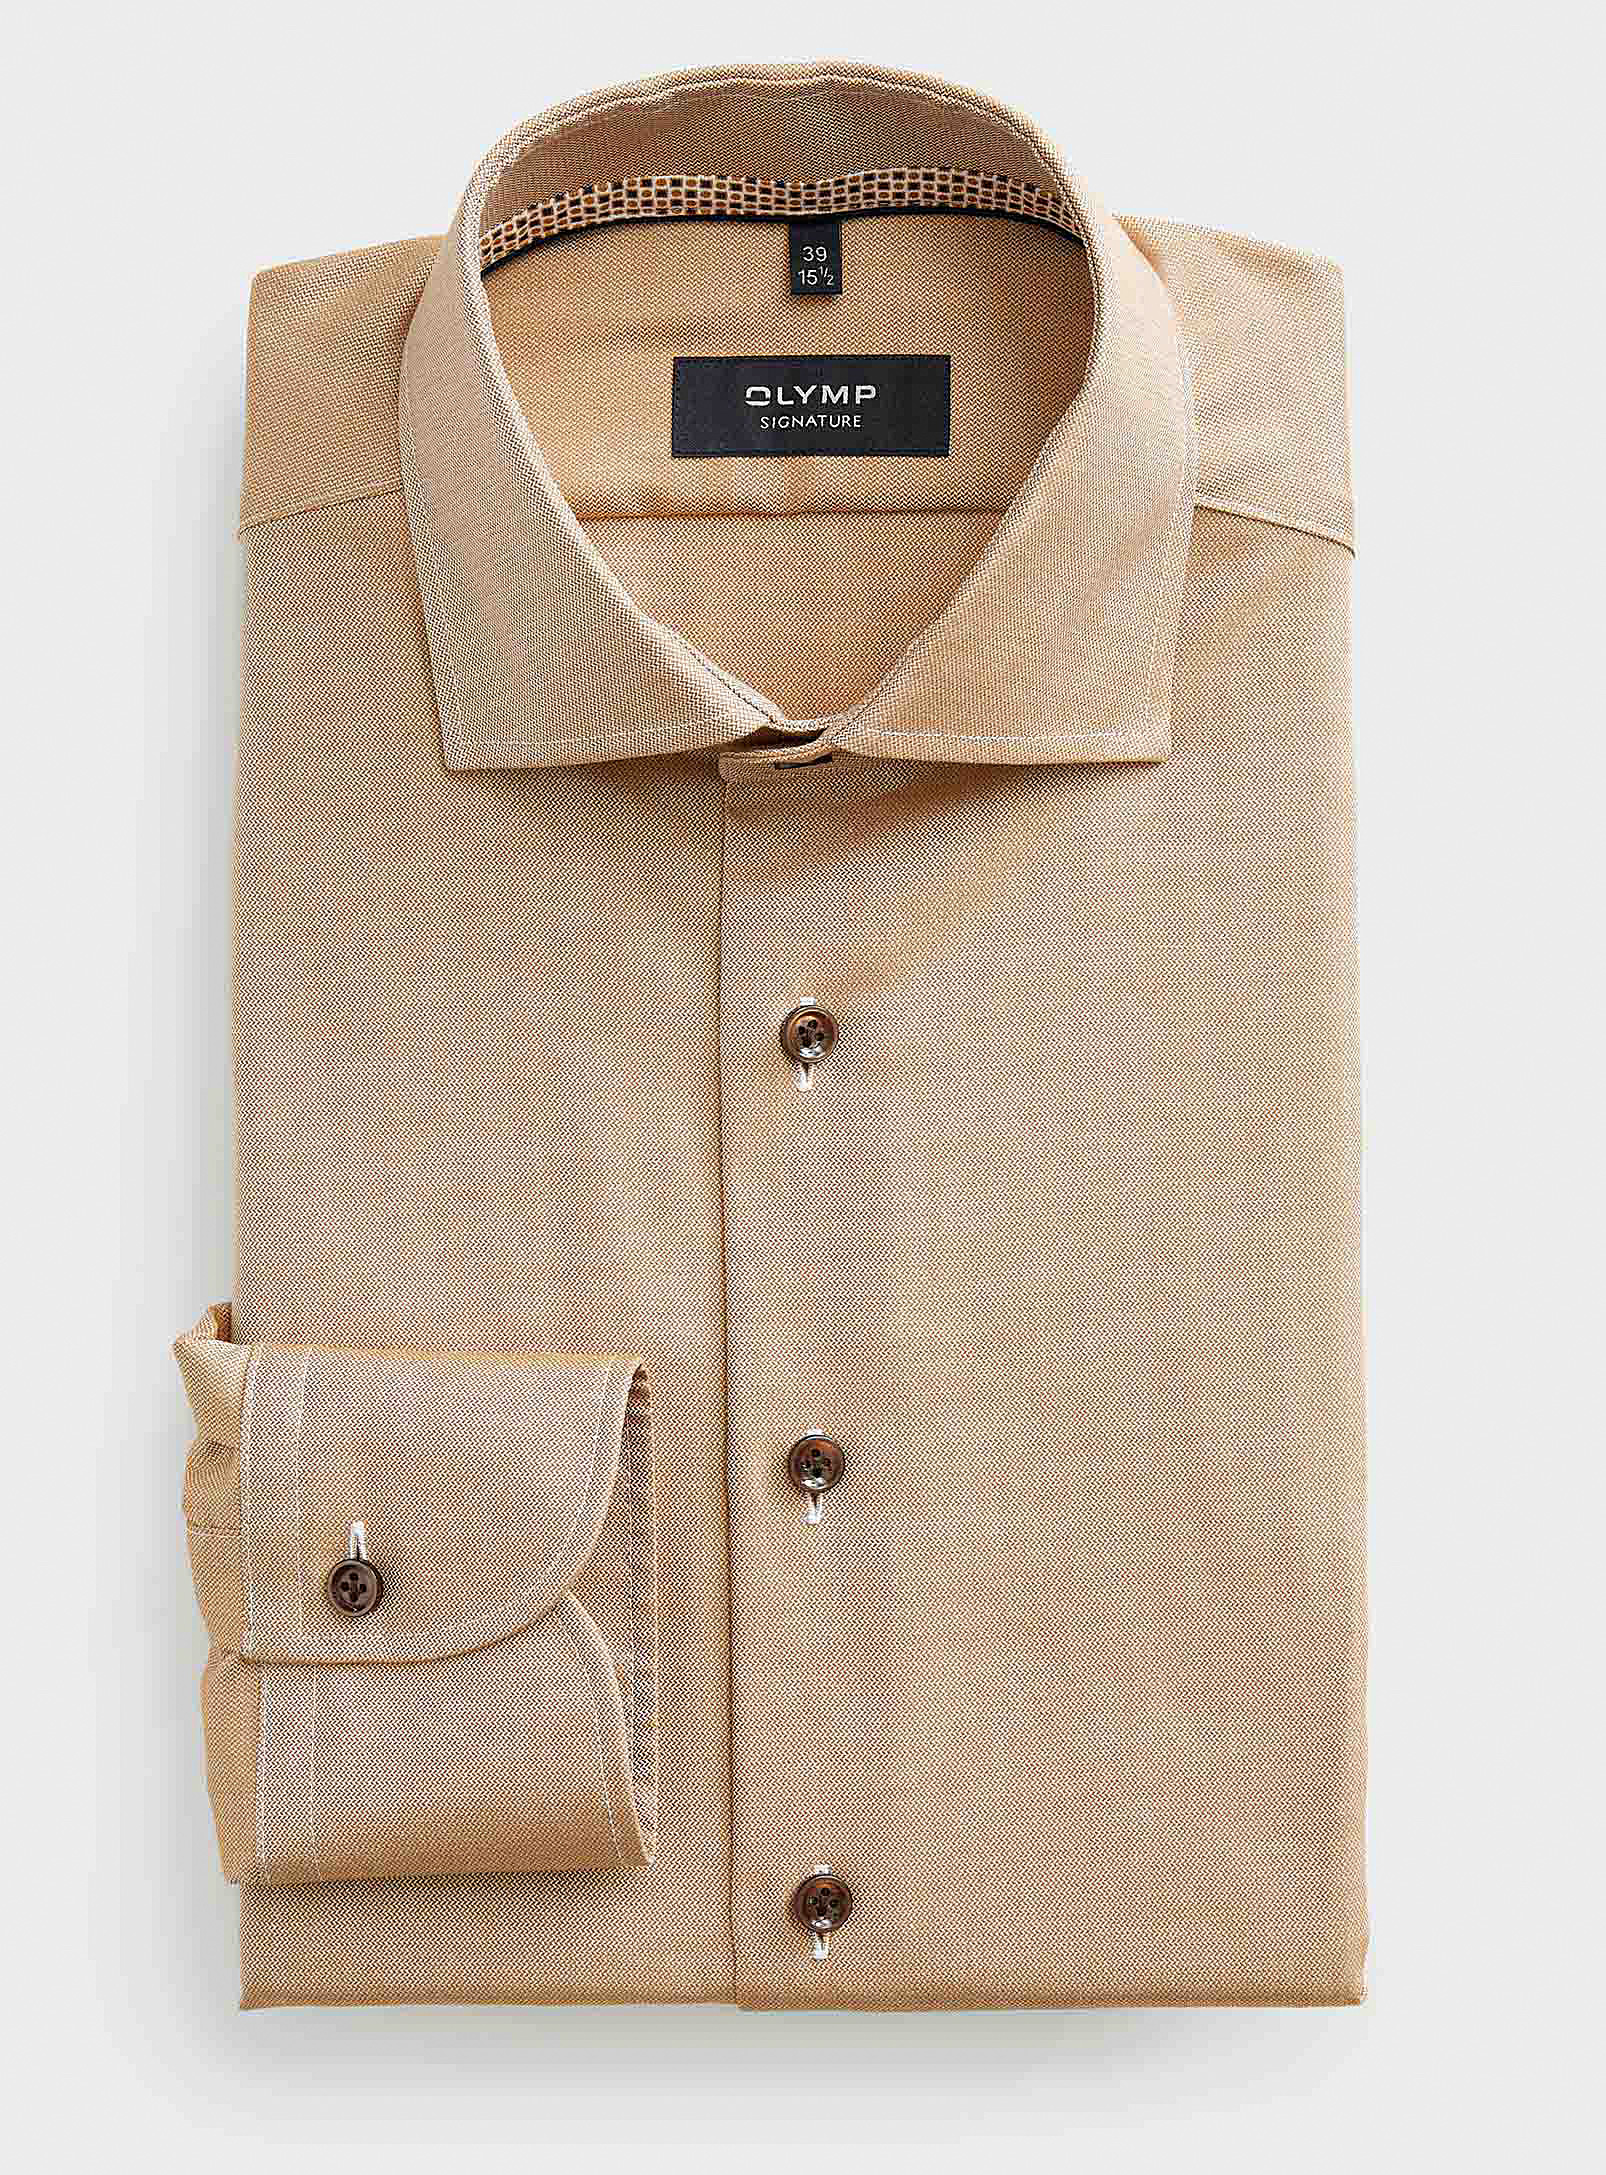 Olymp - La chemise pur coton microchevrons ocre Coupe moderne